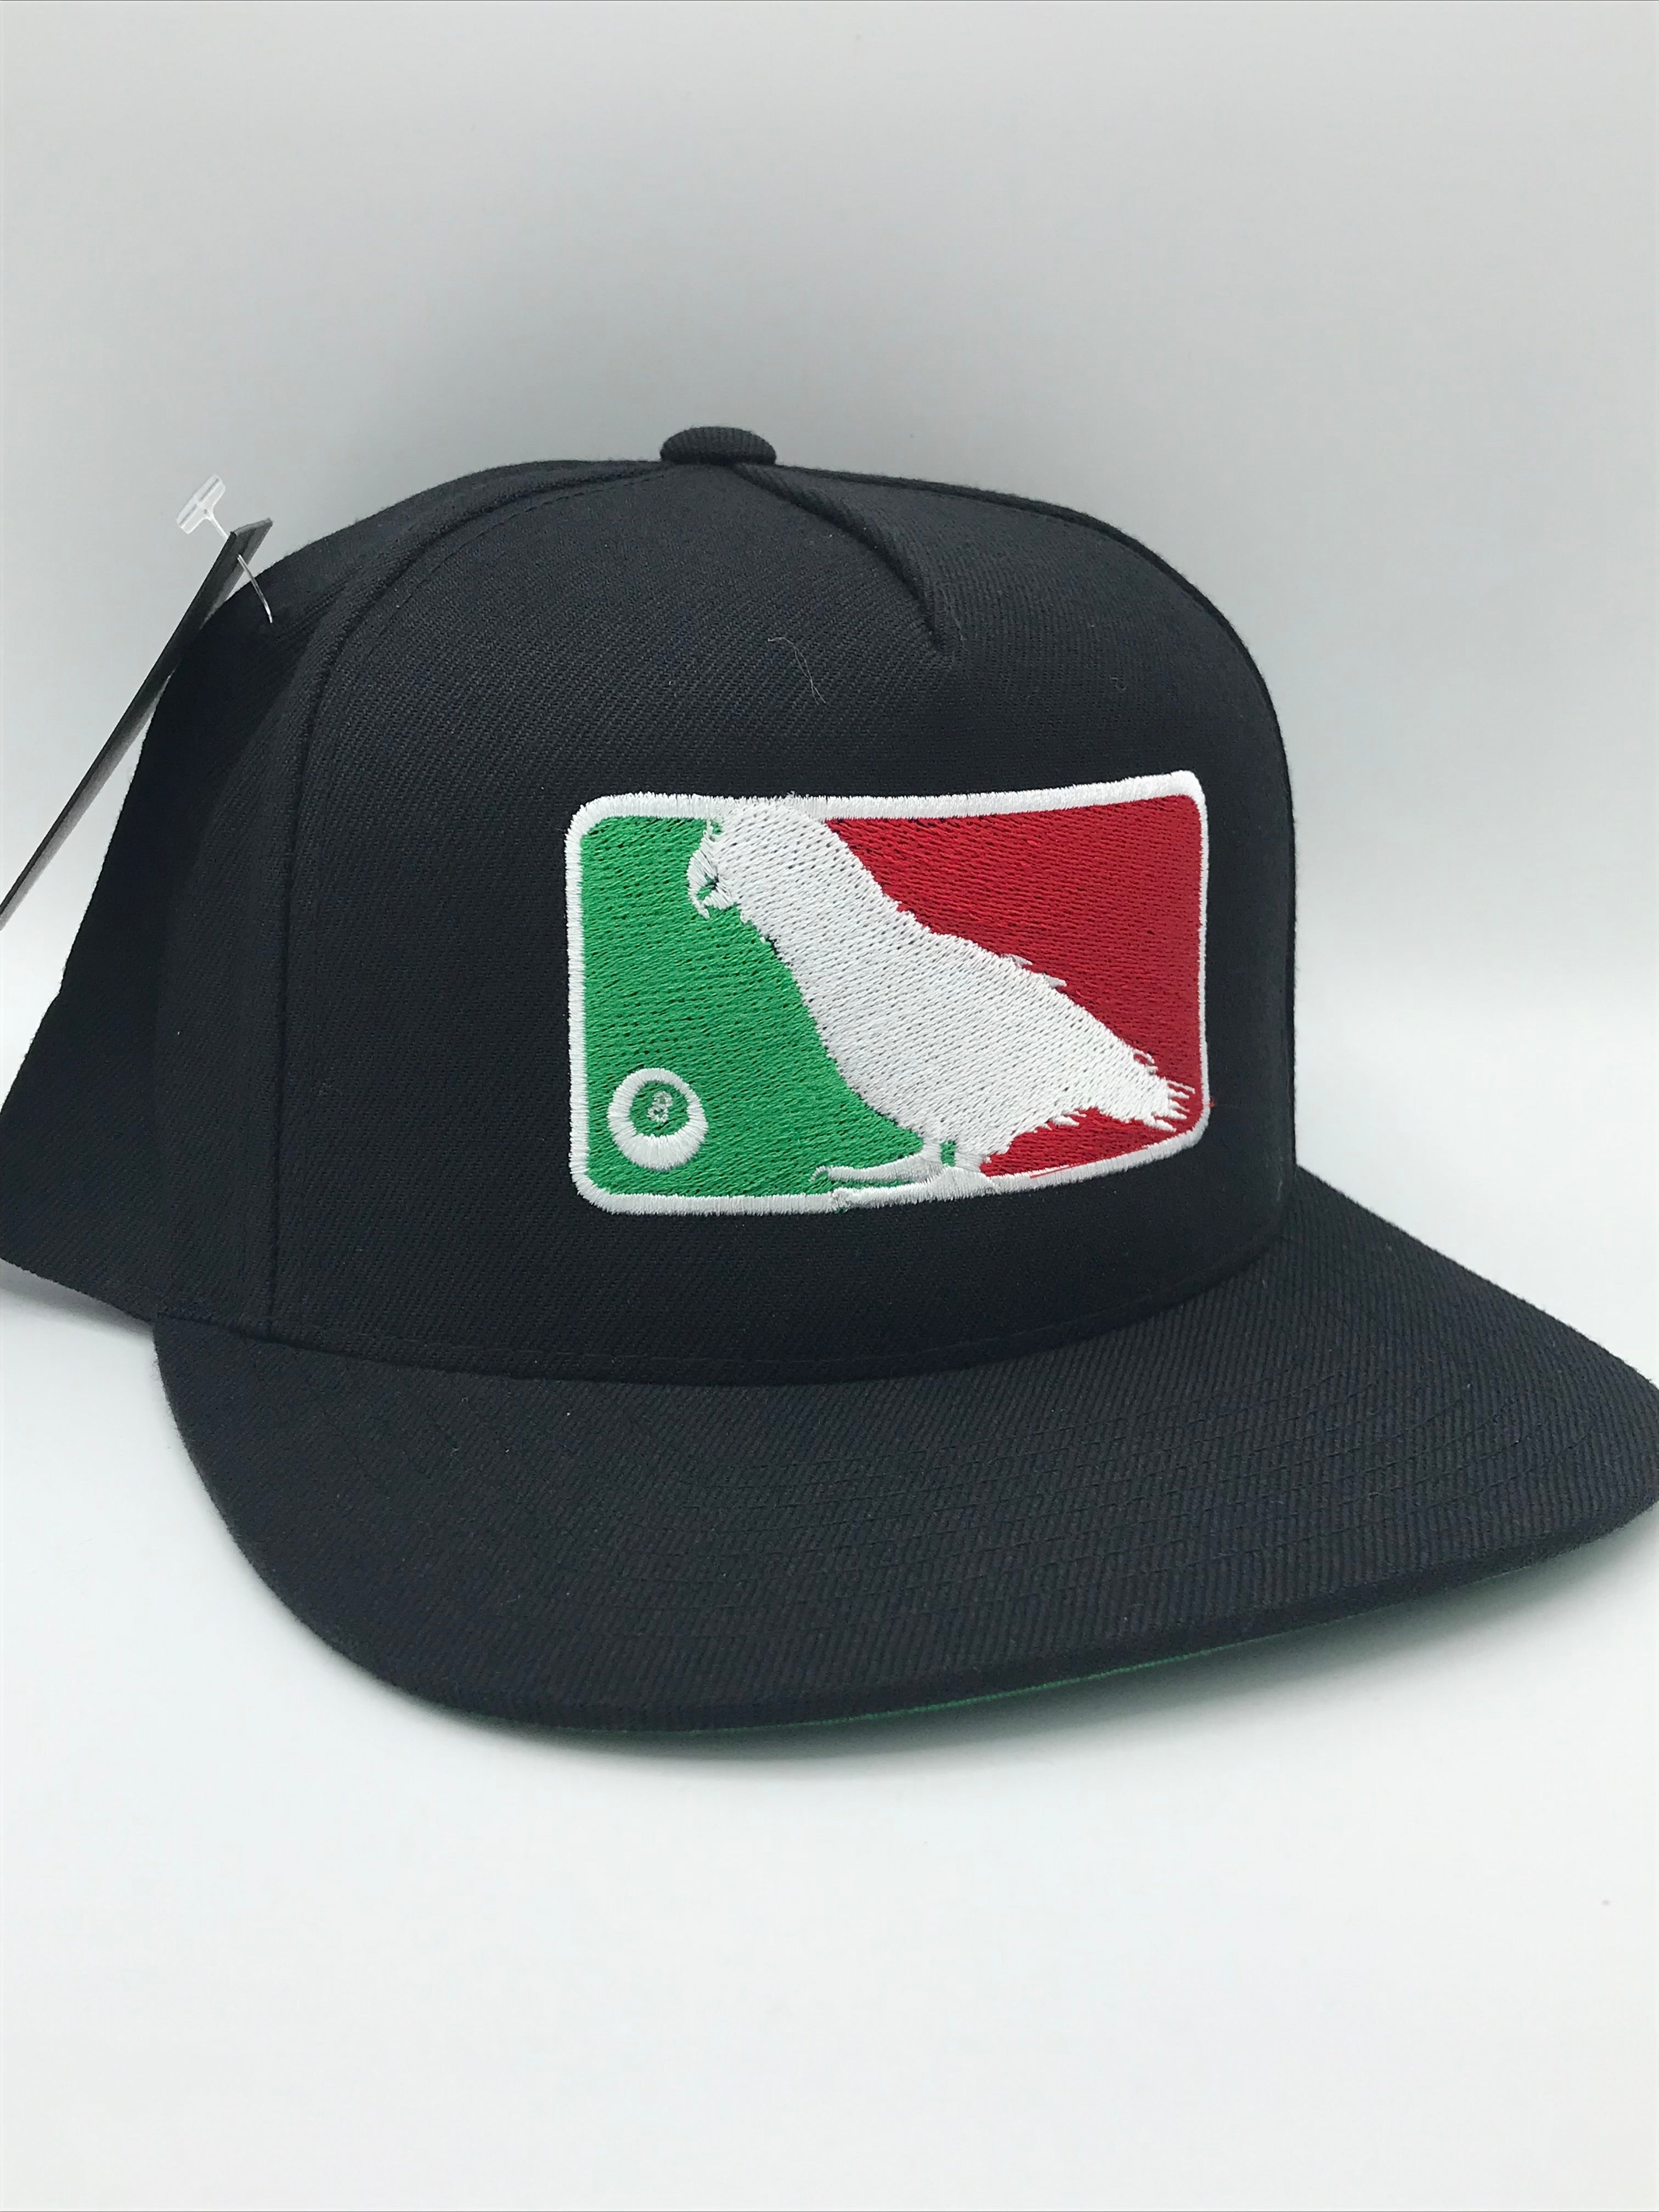 MLB Ballers MX Hat